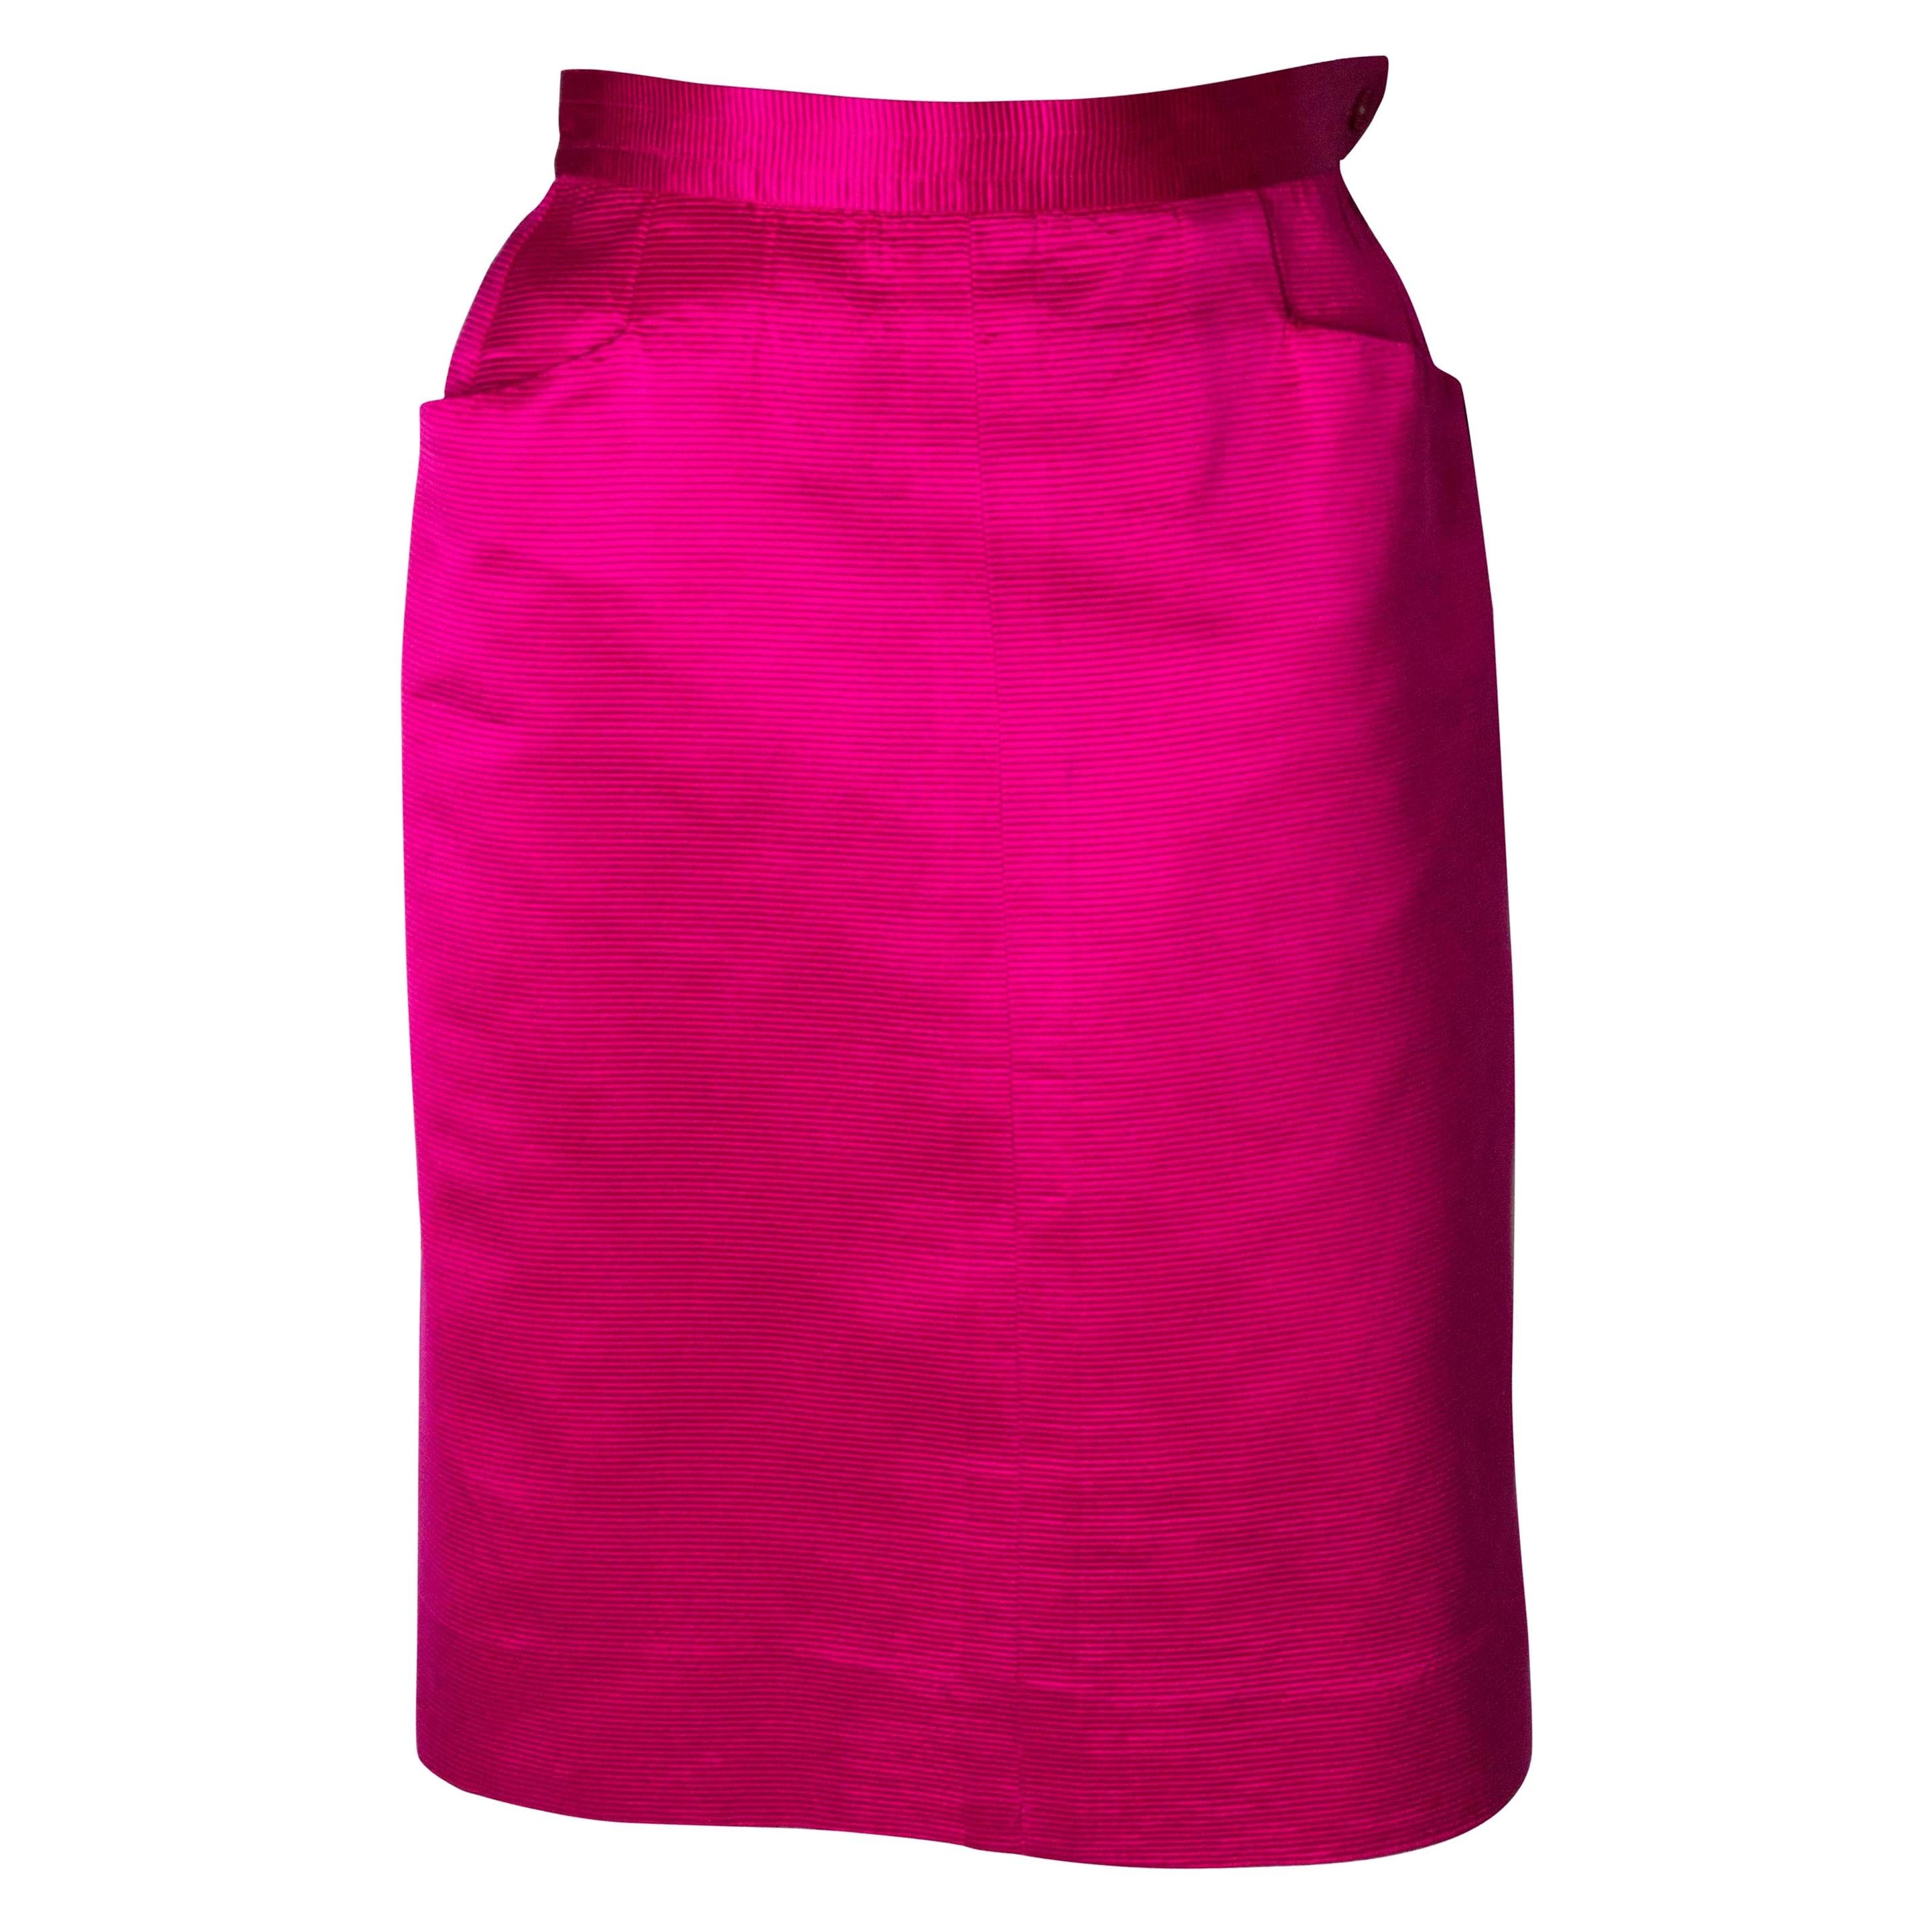  Vintage Yves Saint Laurent  Pink Skirt